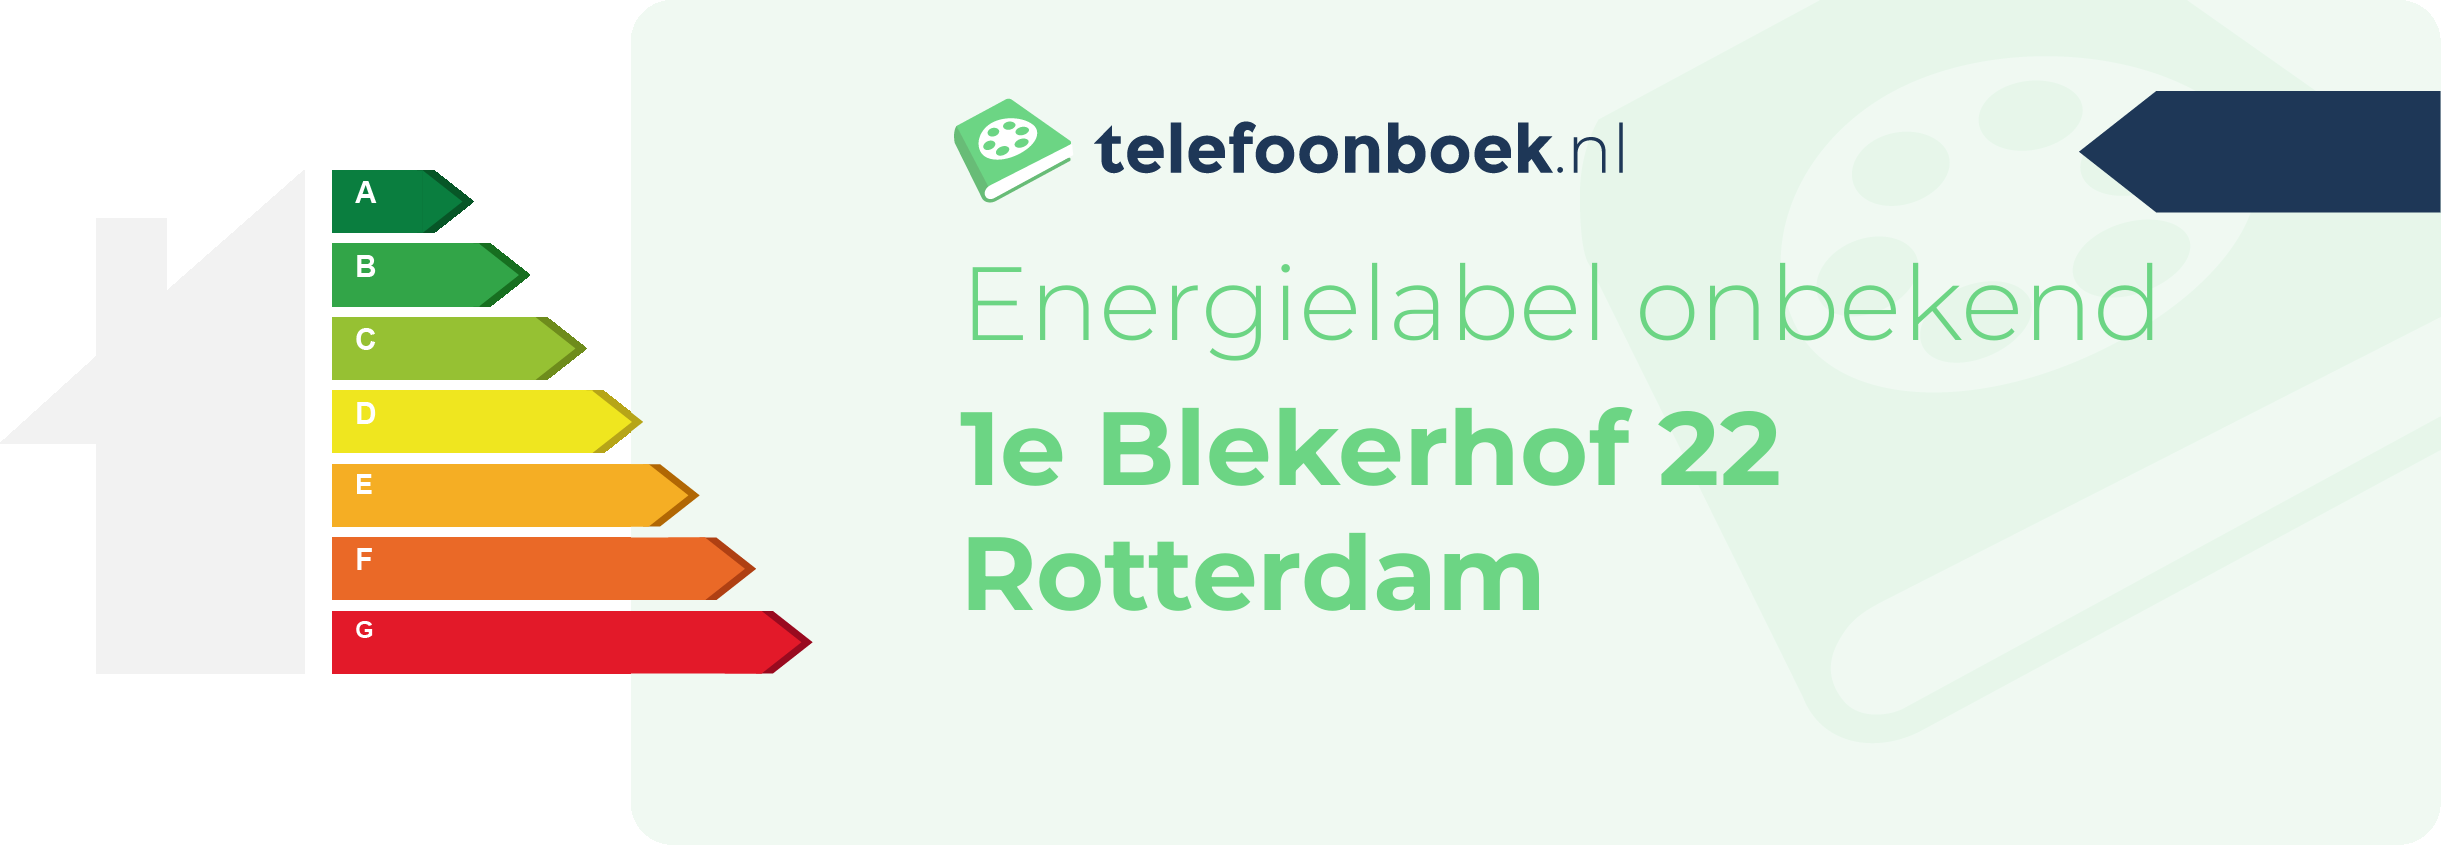 Energielabel 1e Blekerhof 22 Rotterdam